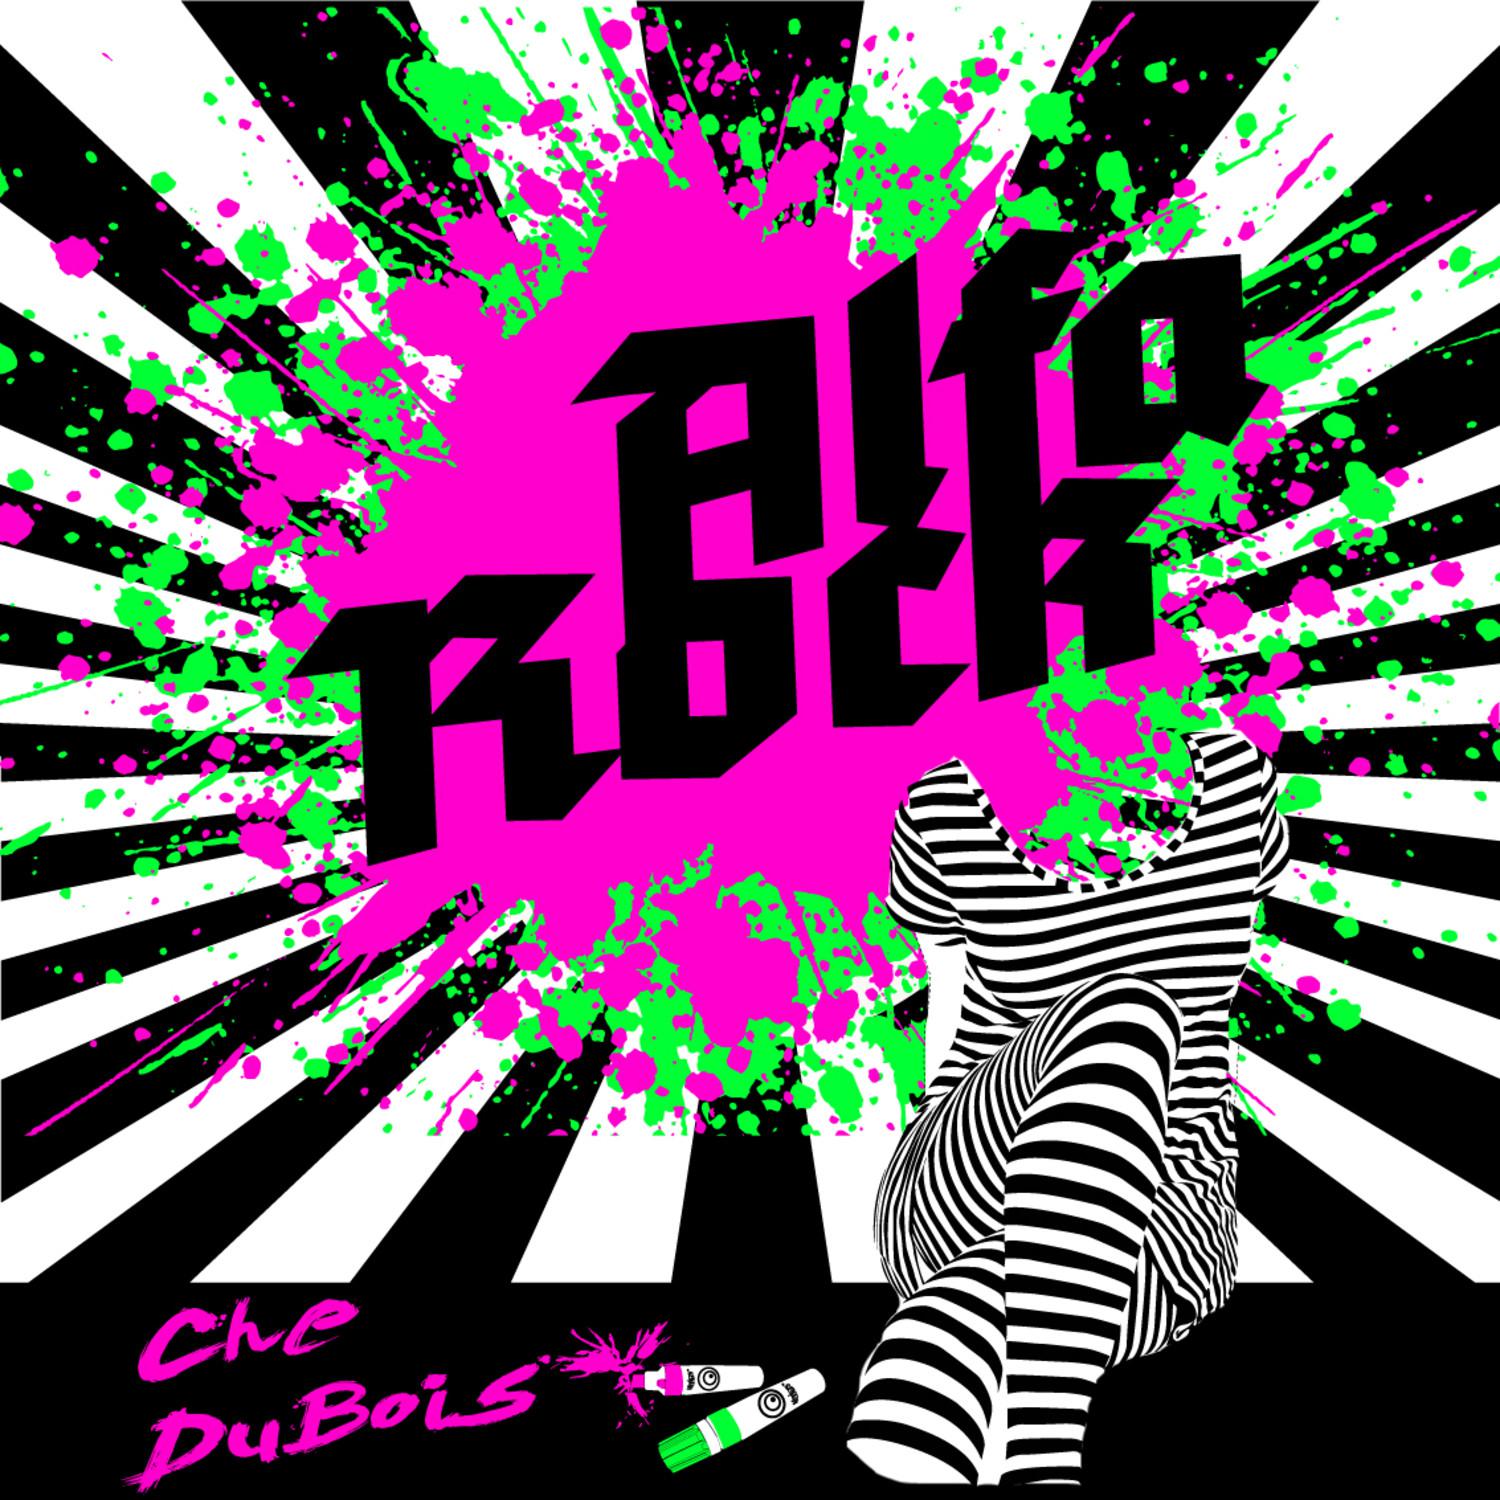 Che DuBois - Alfa Rock ep